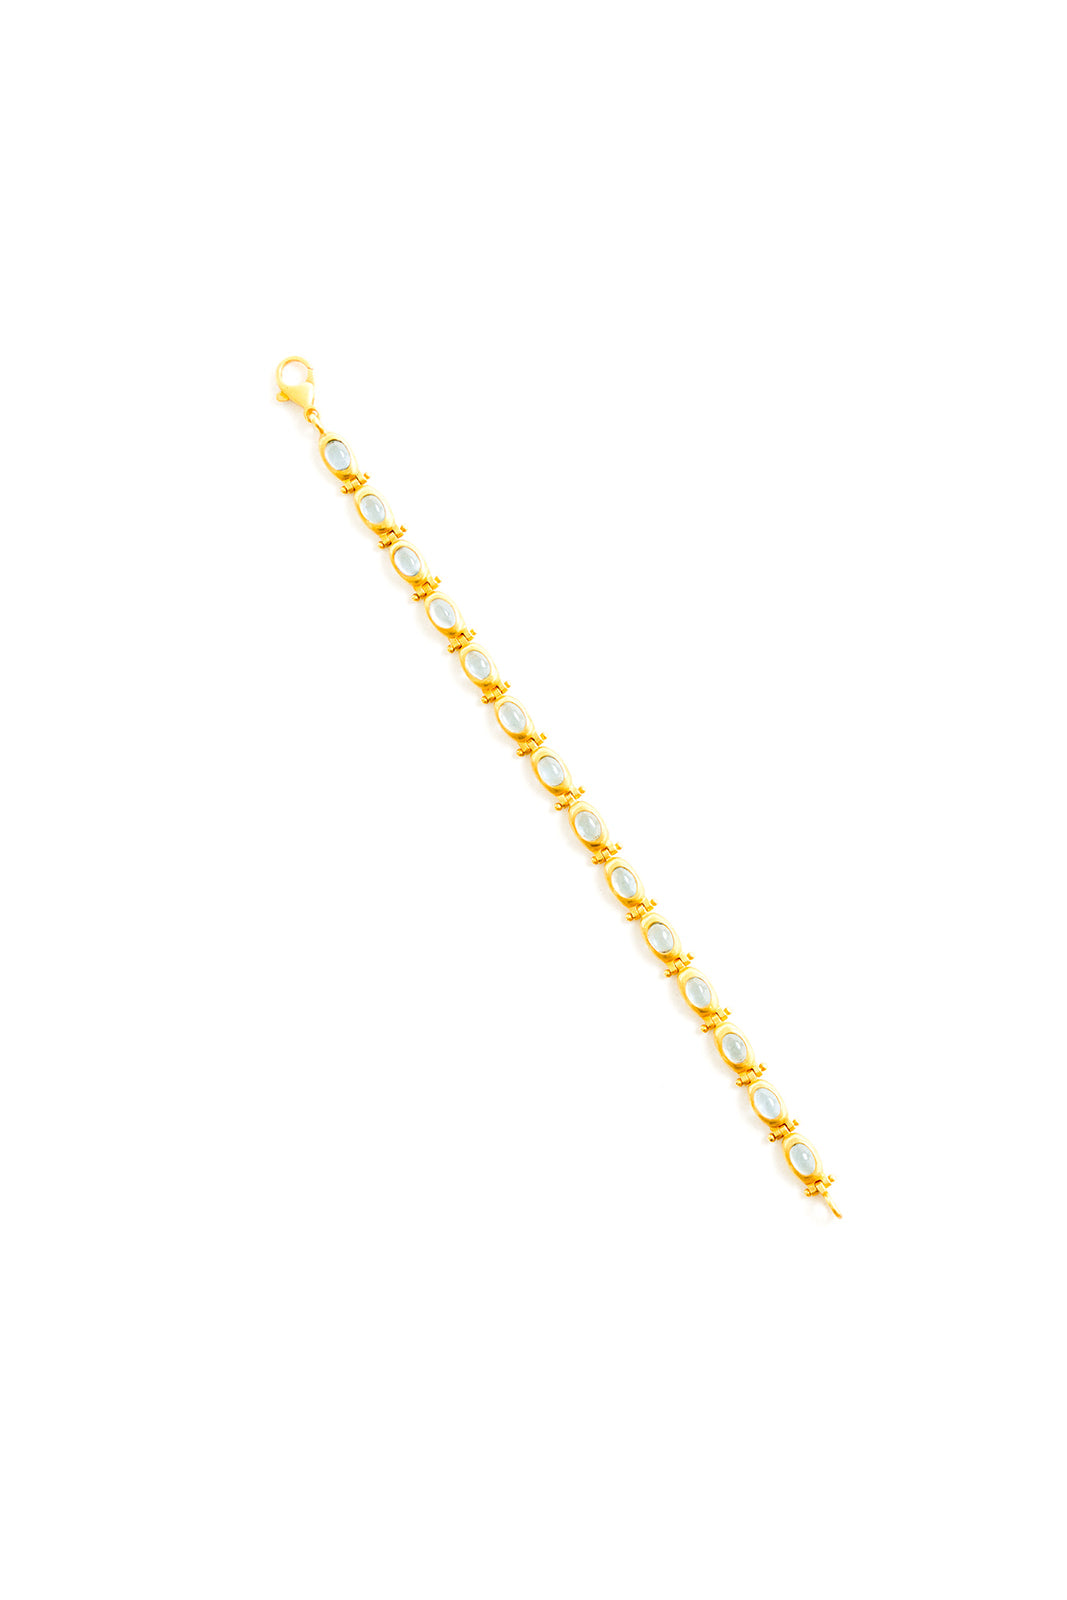 22K Yellow Gold Hinge Link Bracelet with Aqua Cabochon